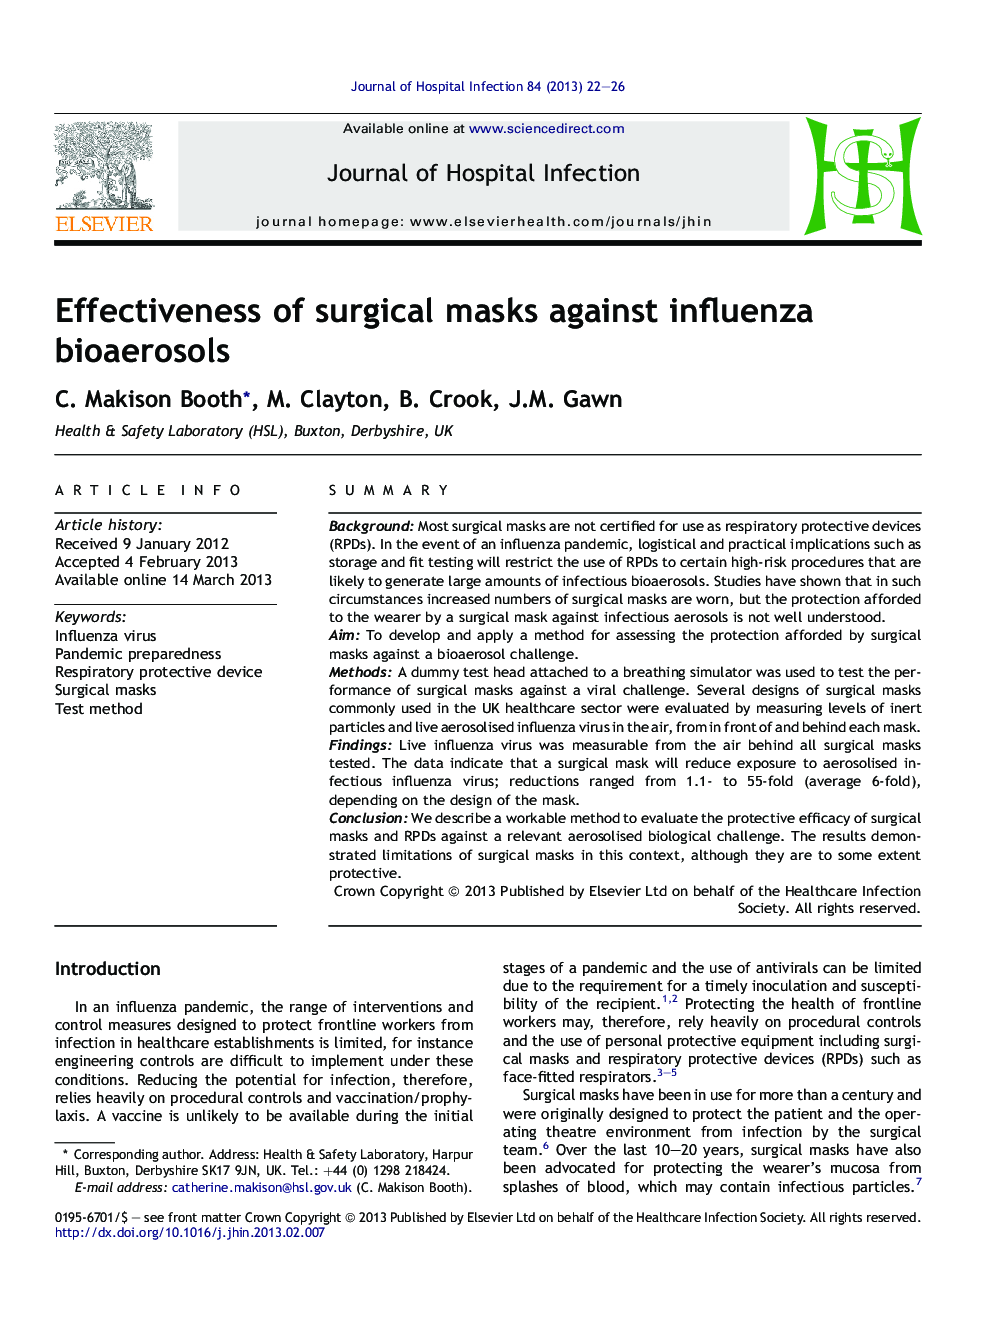 Effectiveness of surgical masks against influenza bioaerosols